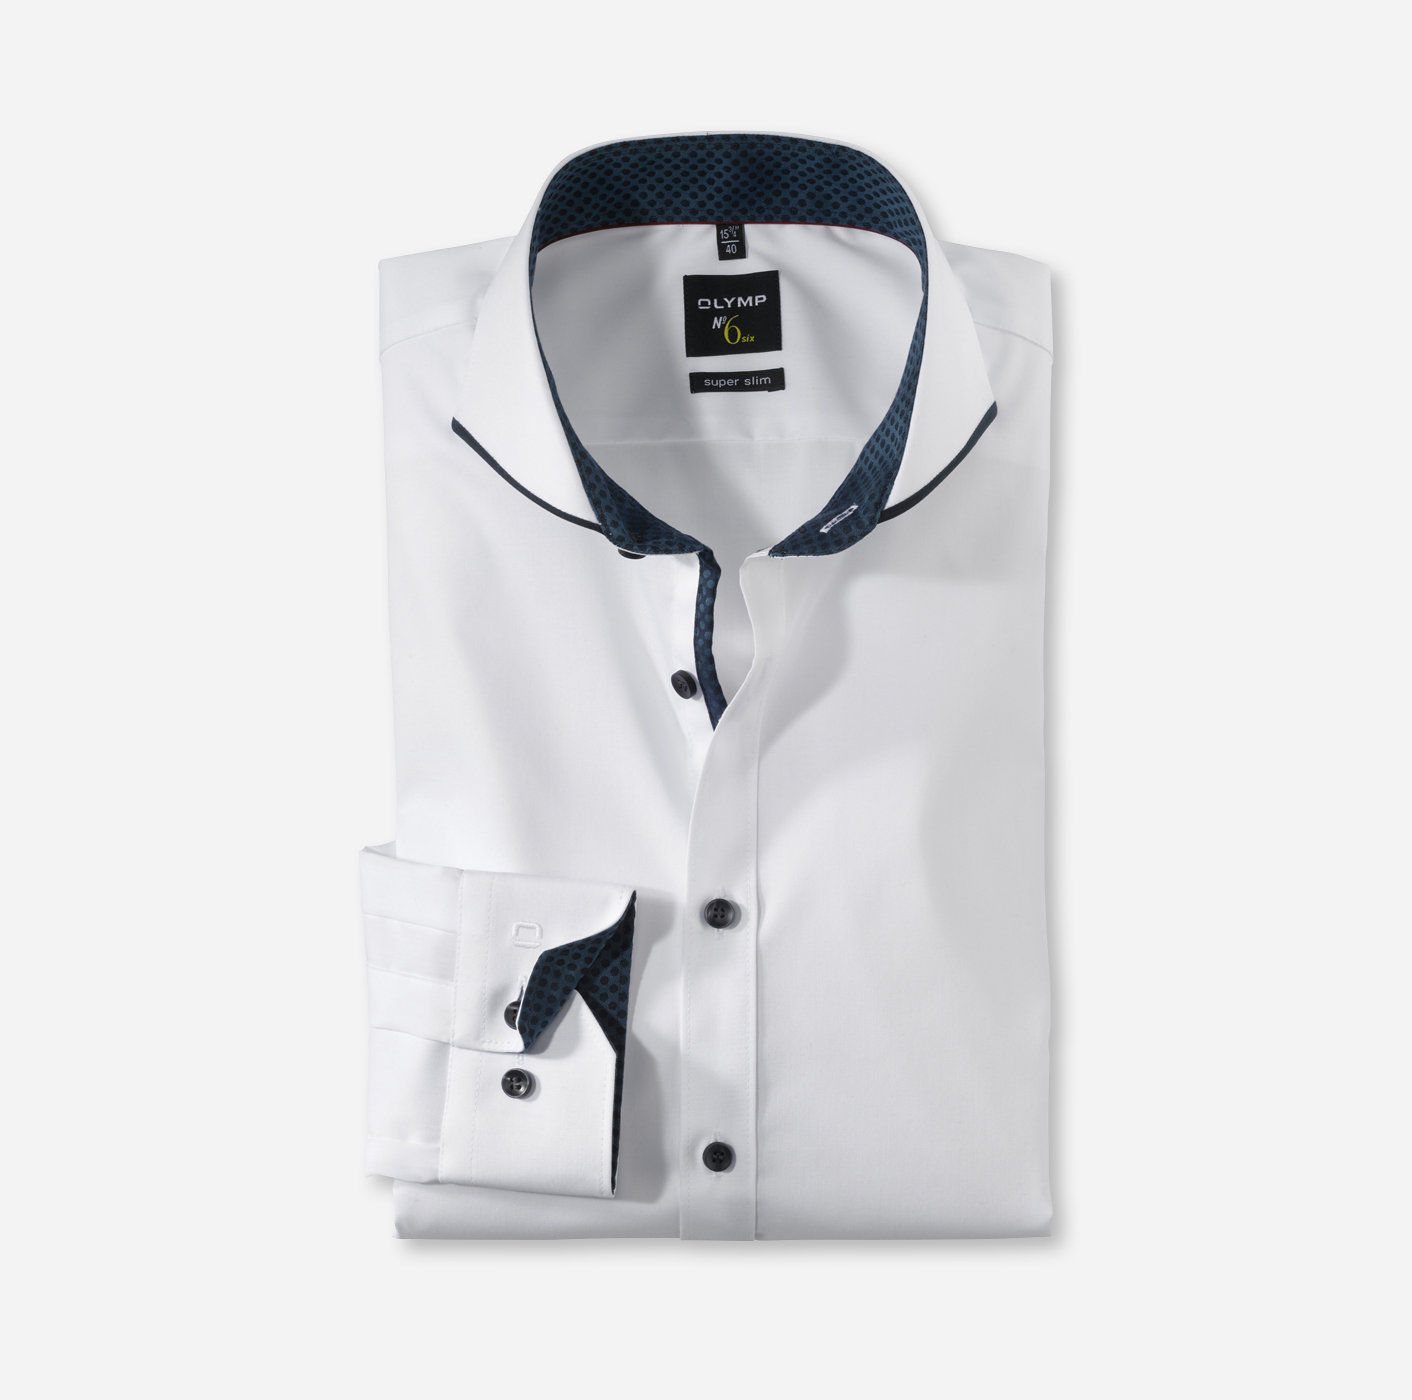 OLYMP No. Six, super slim, Business shirt, Italien, Marine